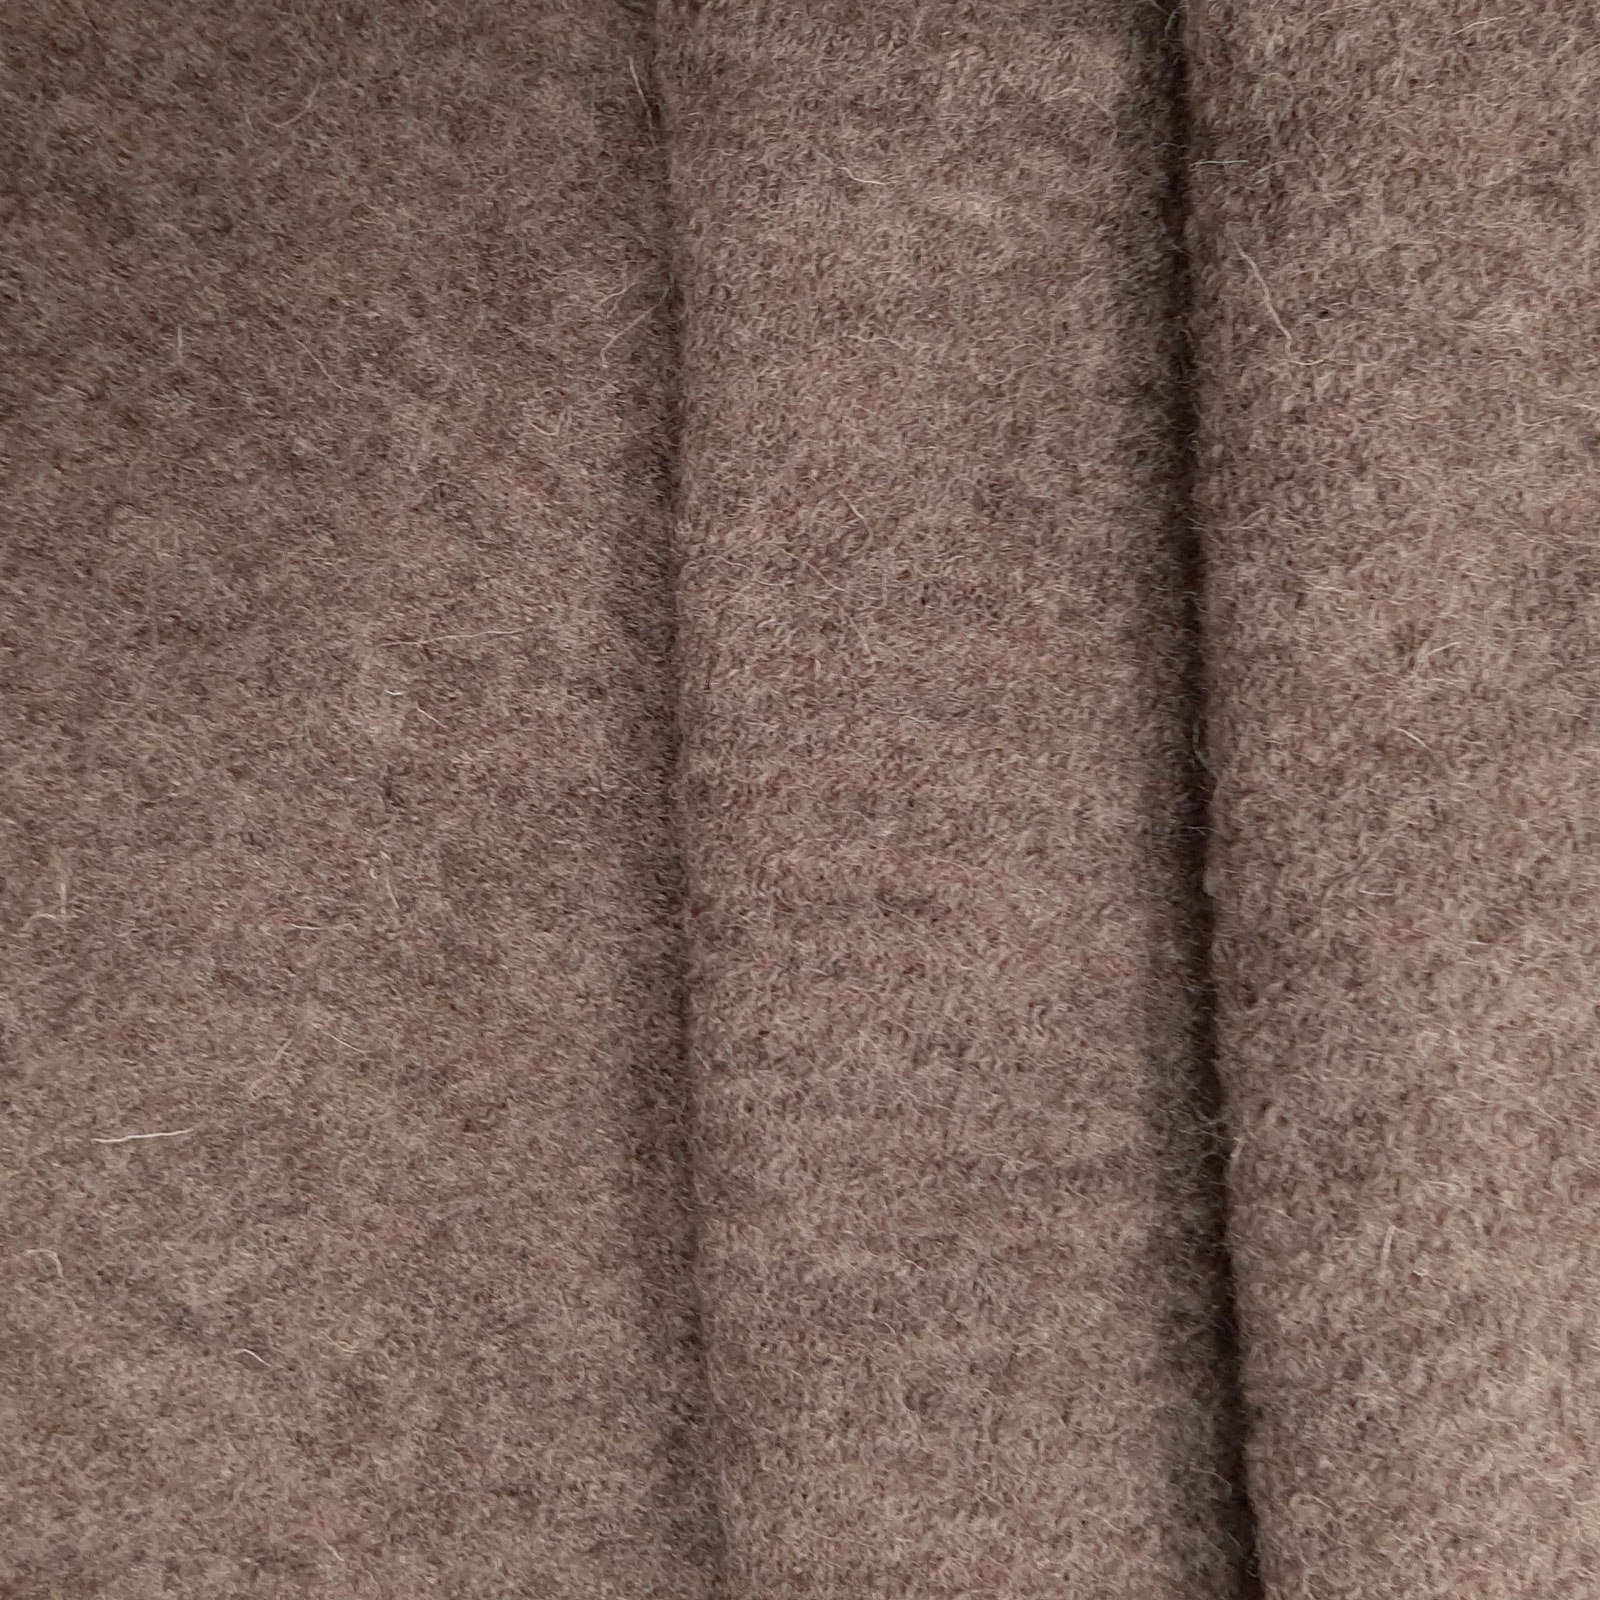 FAVORIT Walkloden - boiled wool / loden - light brown